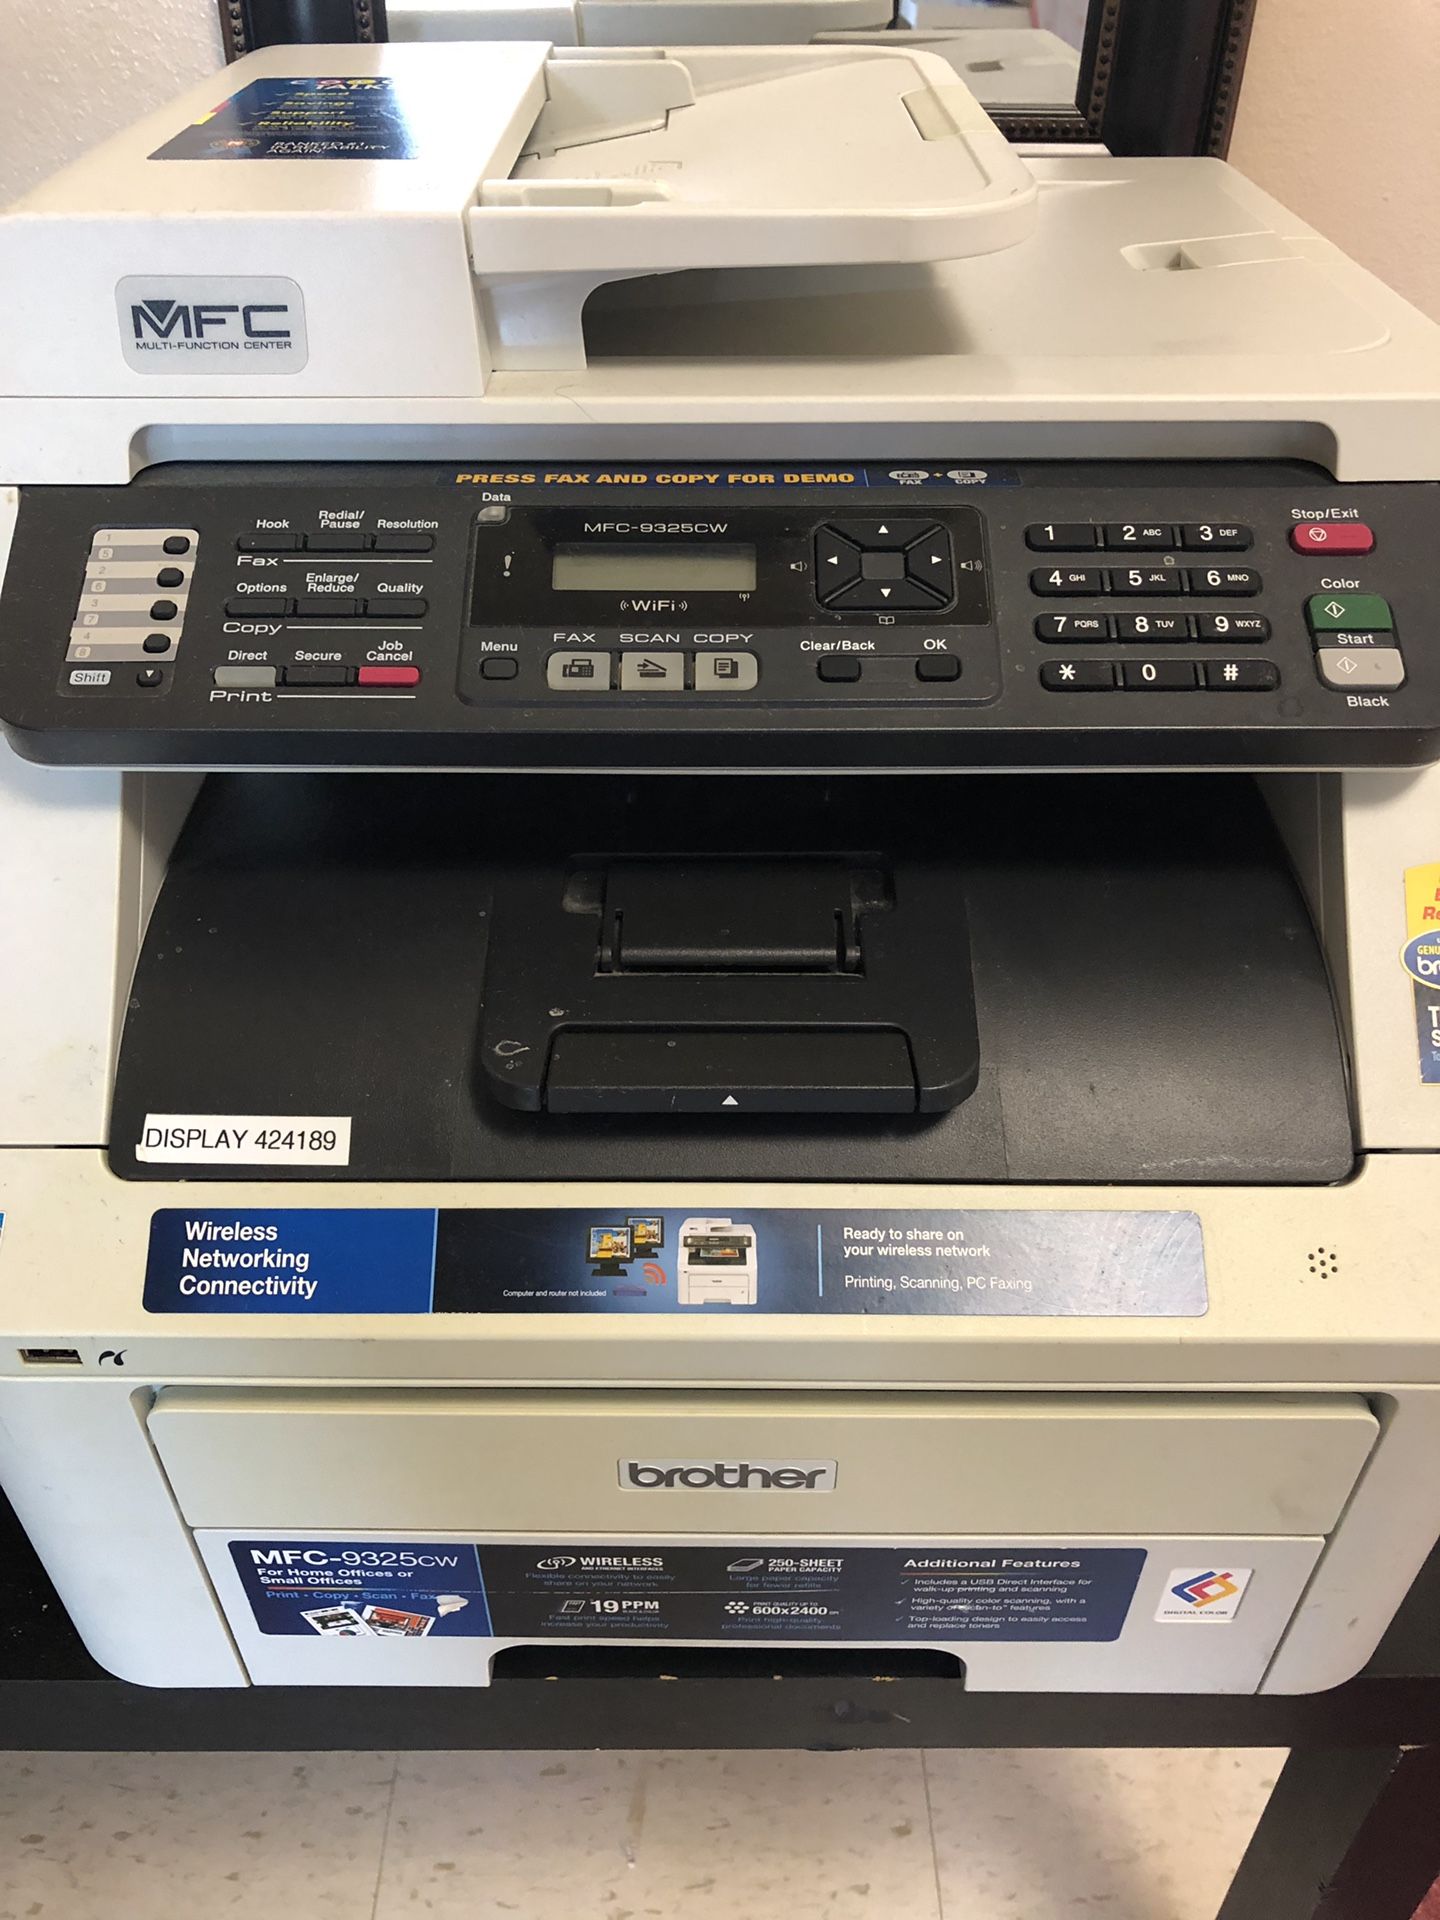 2 printers : brother mfc 9325cw + HP DeskJet 3050 All-in-One Multifunction ( Printer / Copier / Scanner )